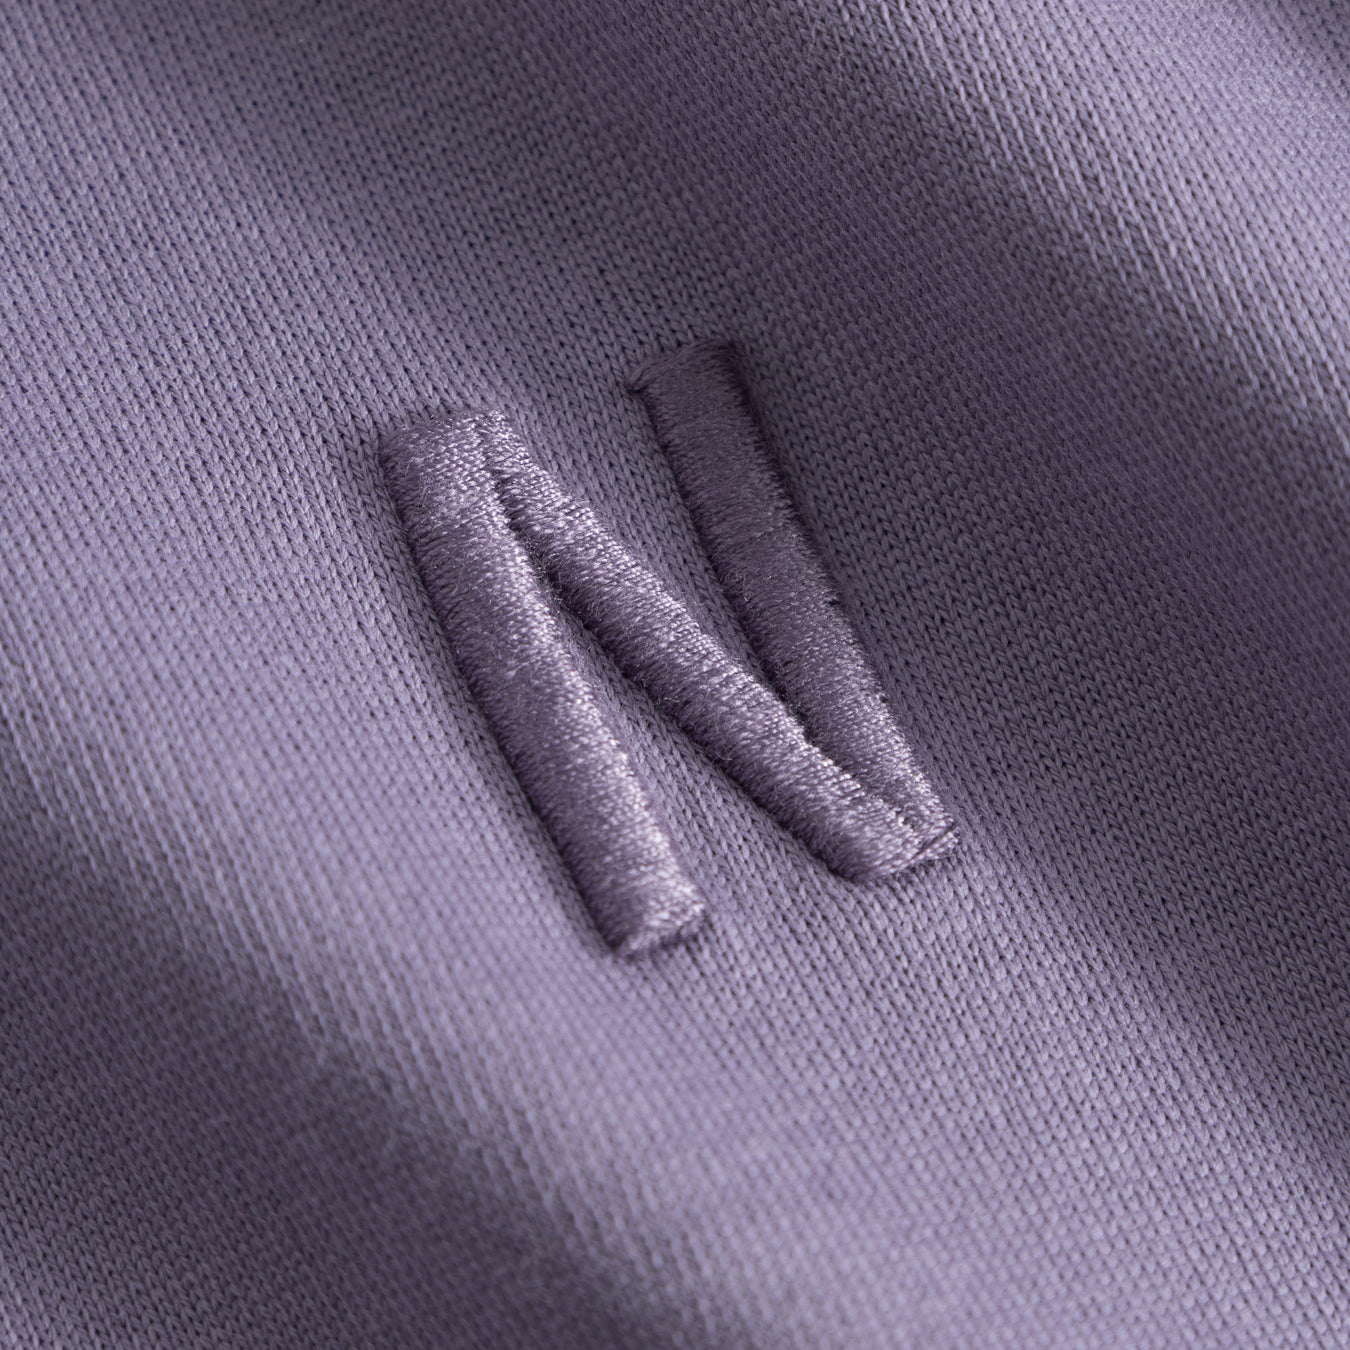 Johannes N Logo T-Shirt - Dusk Purple